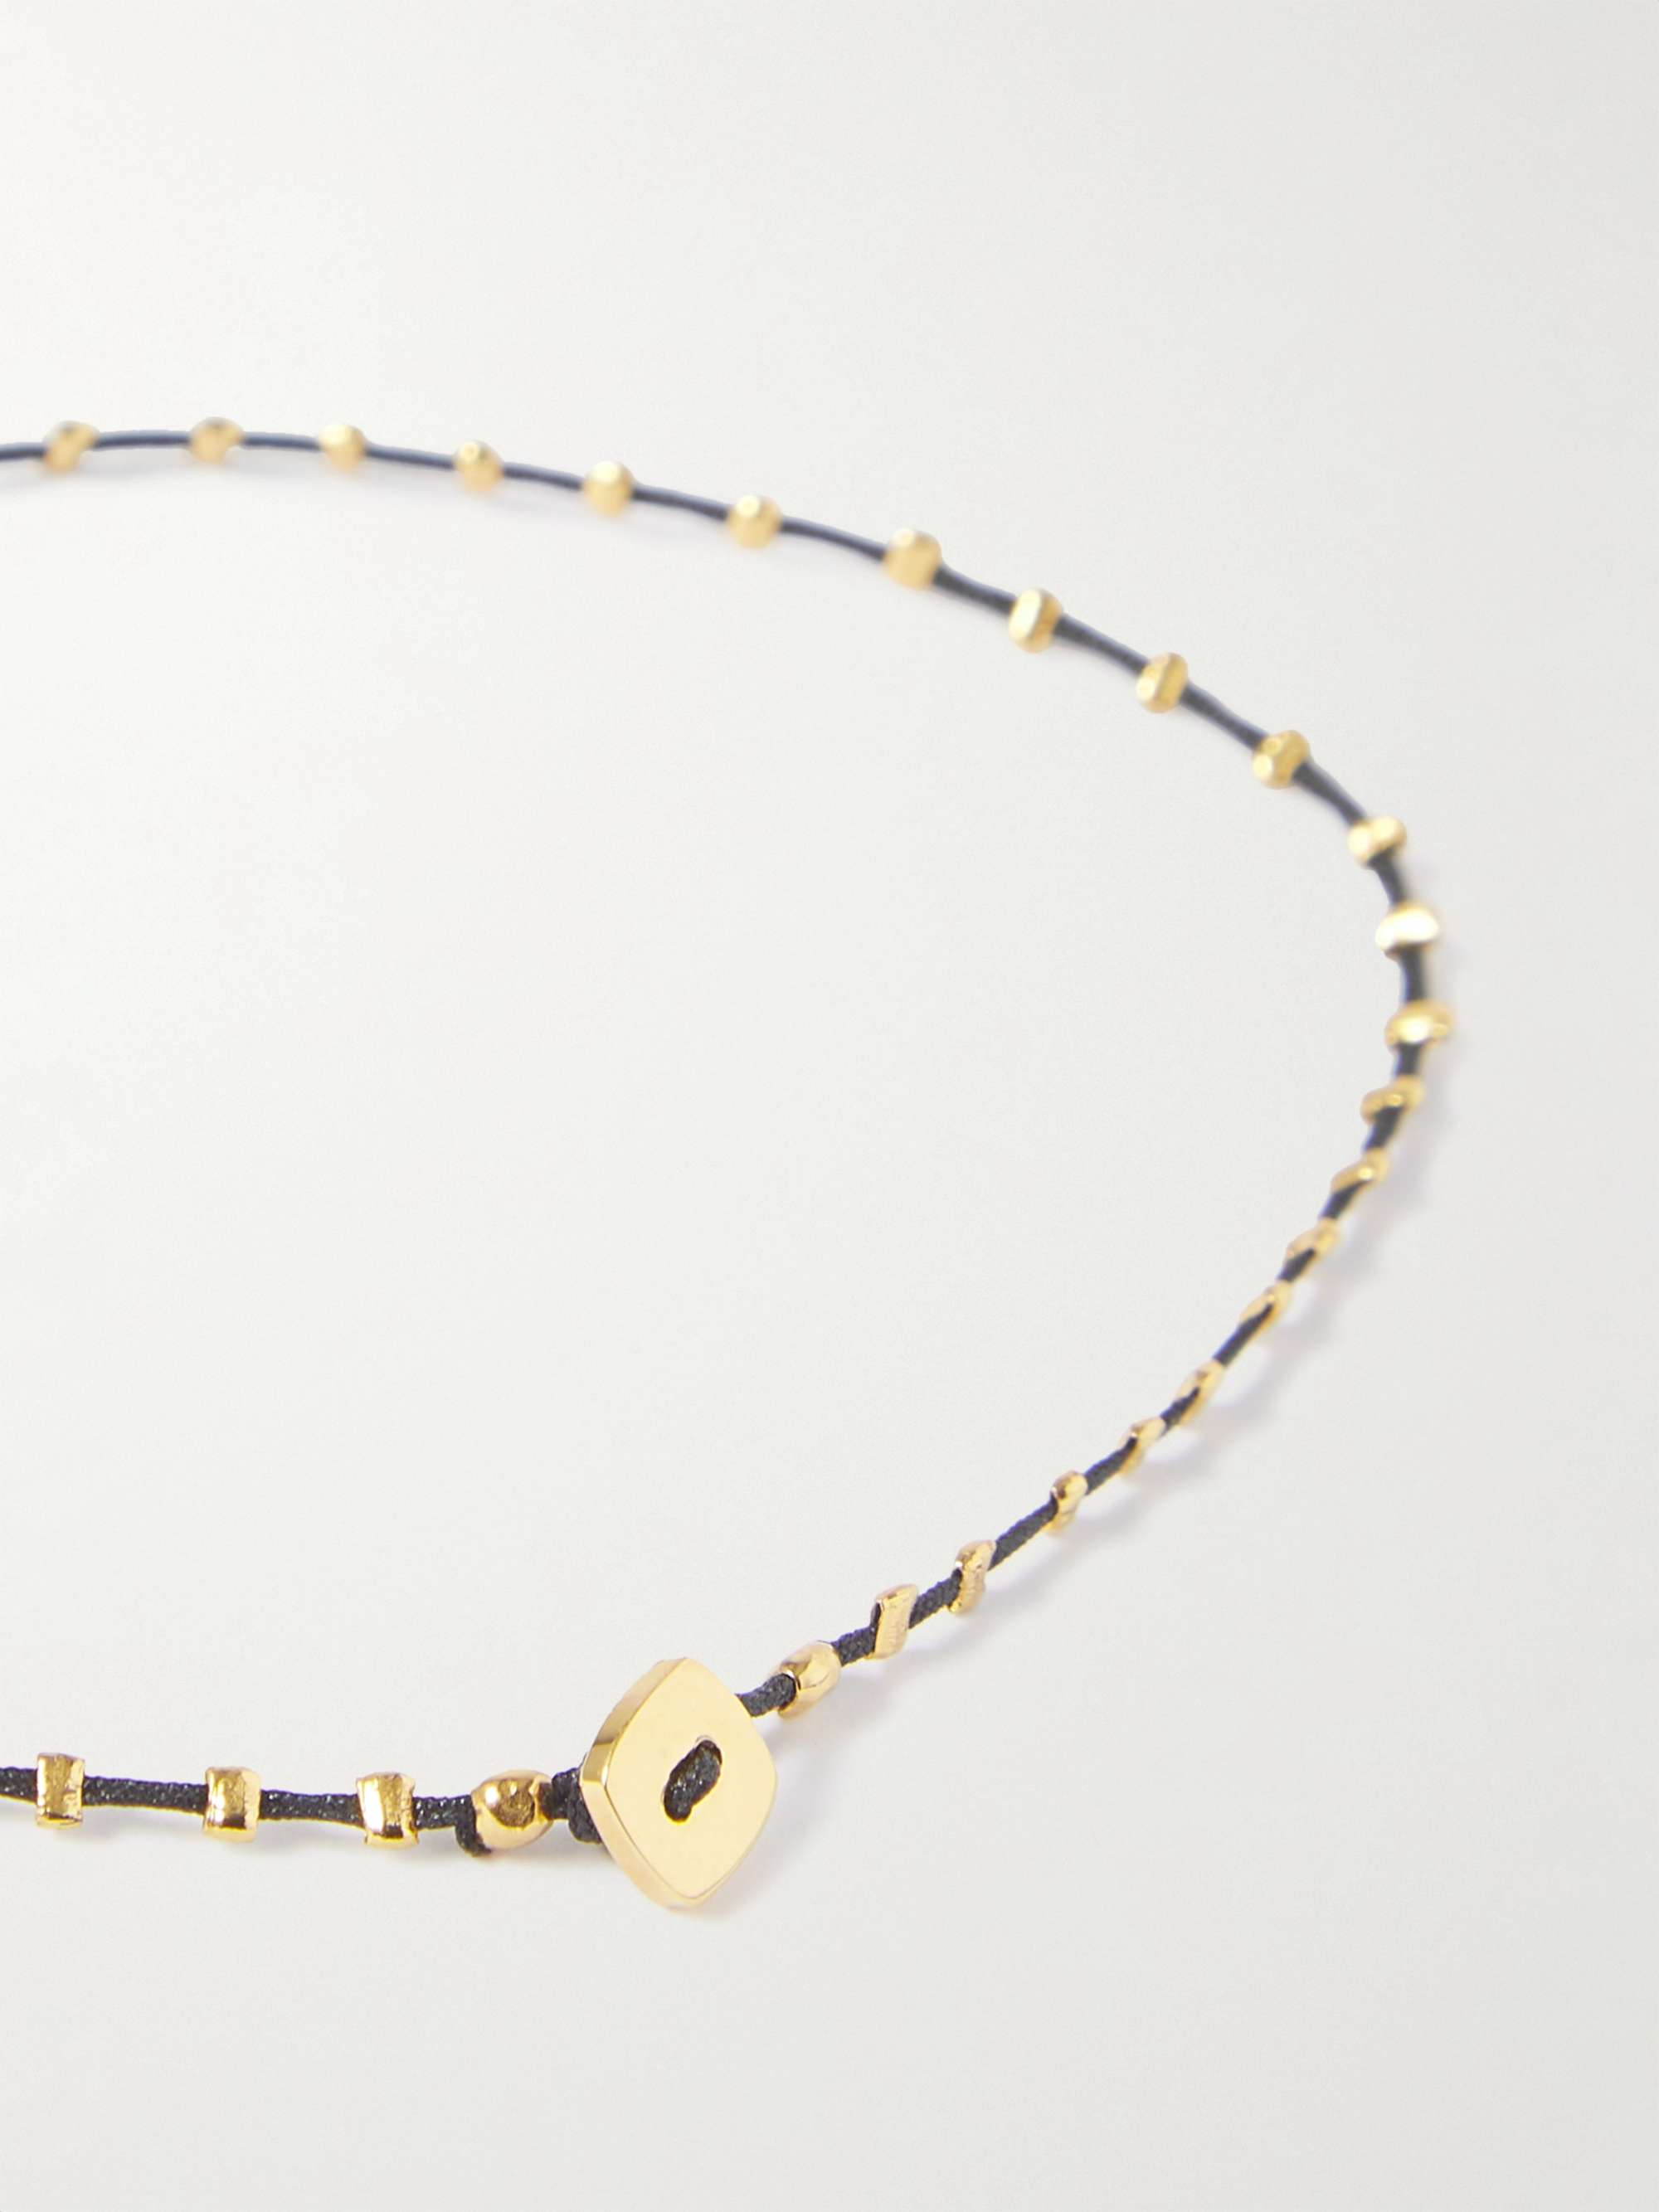 MIANSAI Ita Cord and Gold-Plated Bracelet